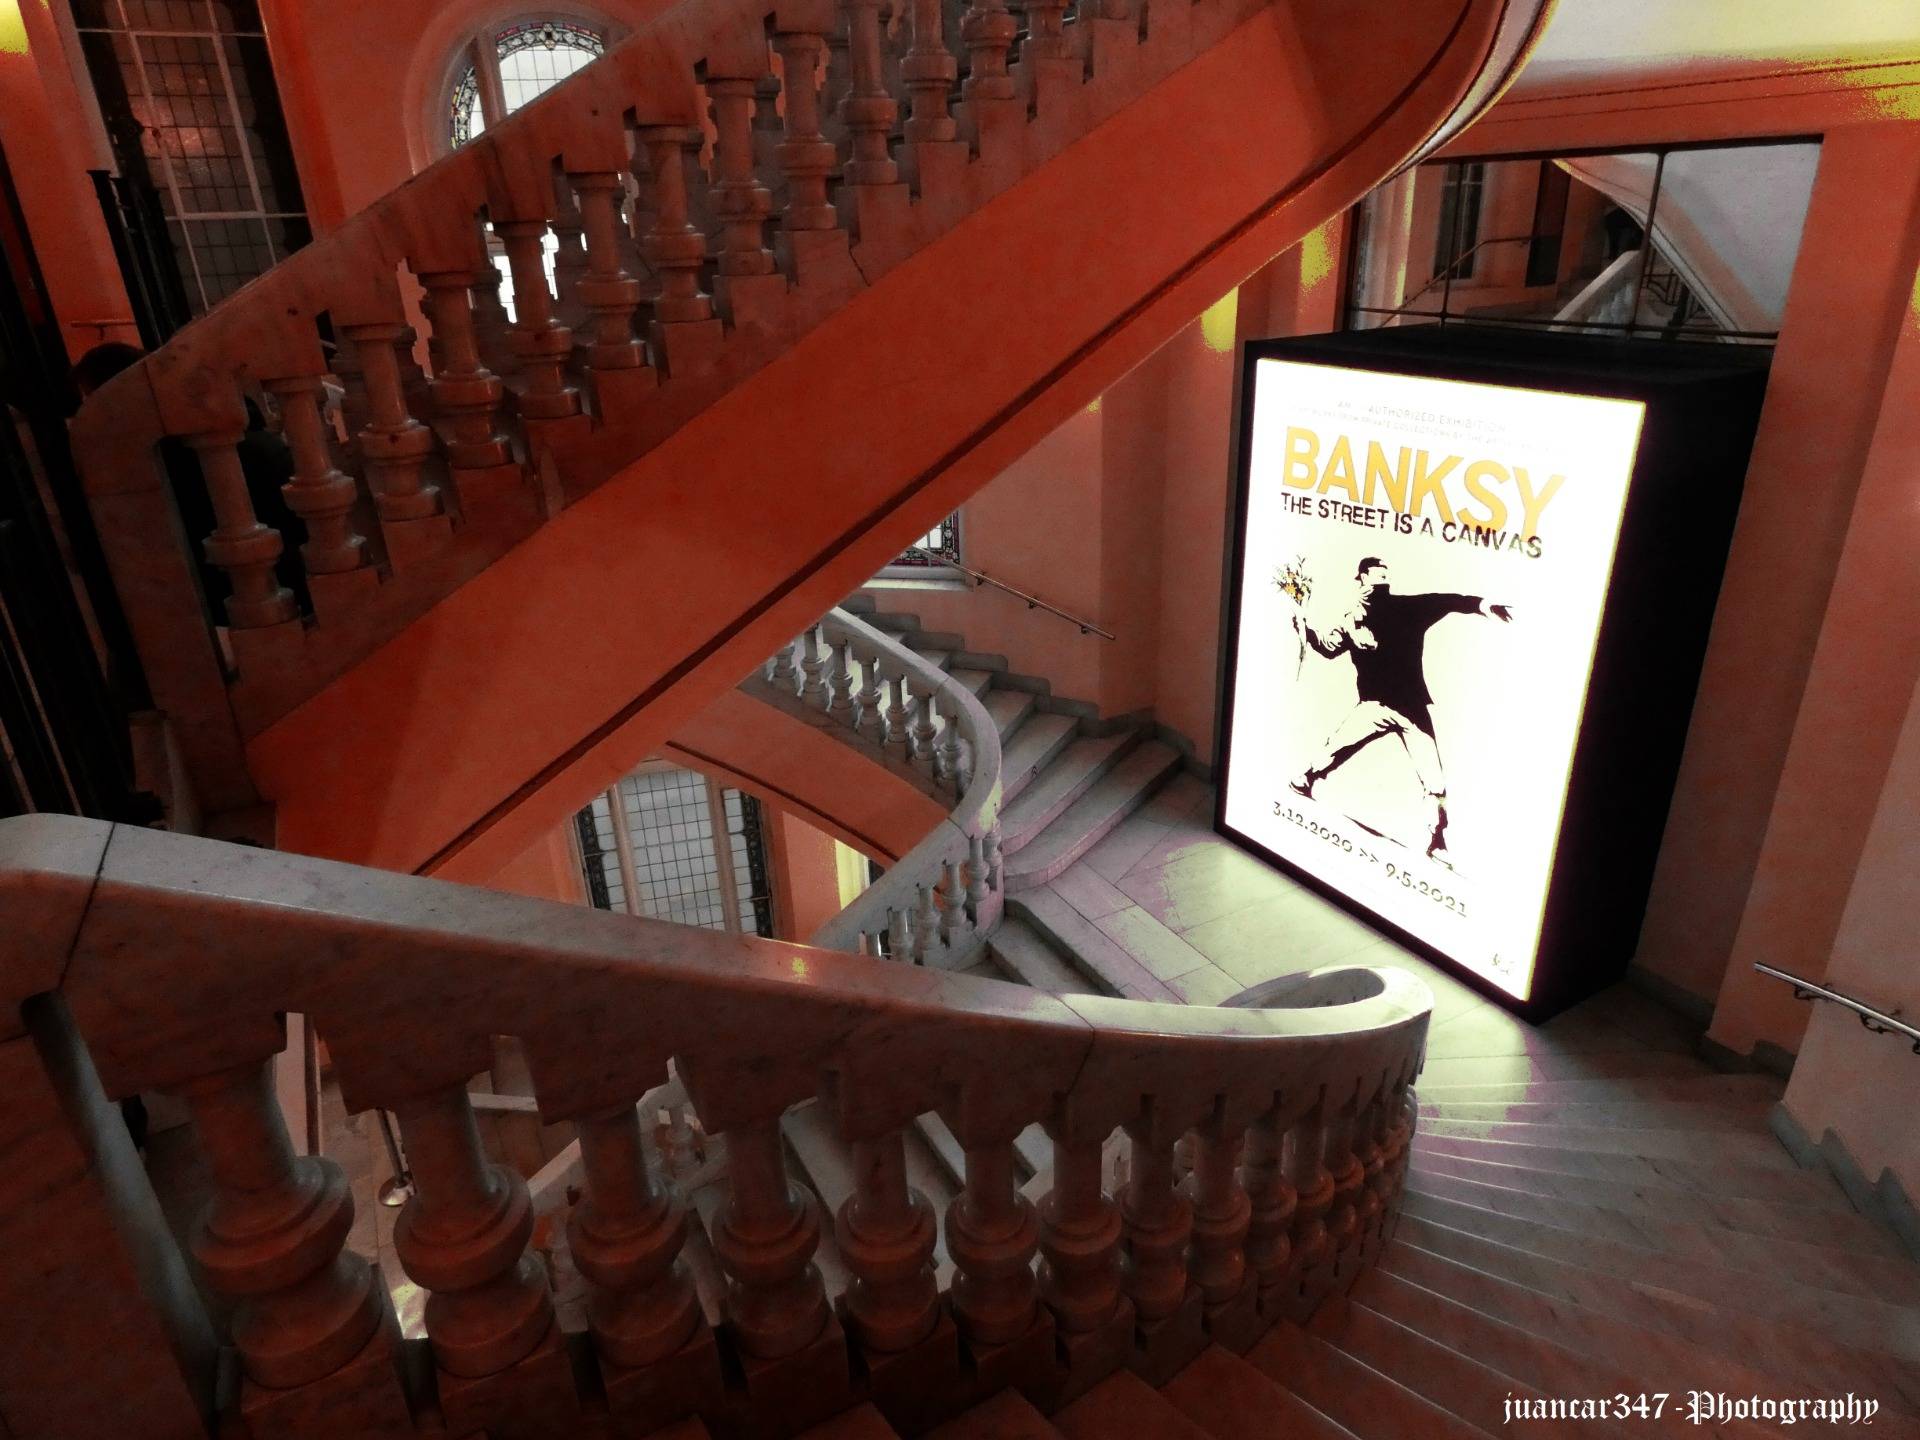 The magnificent staircase of the Círculo de Bellas Artes